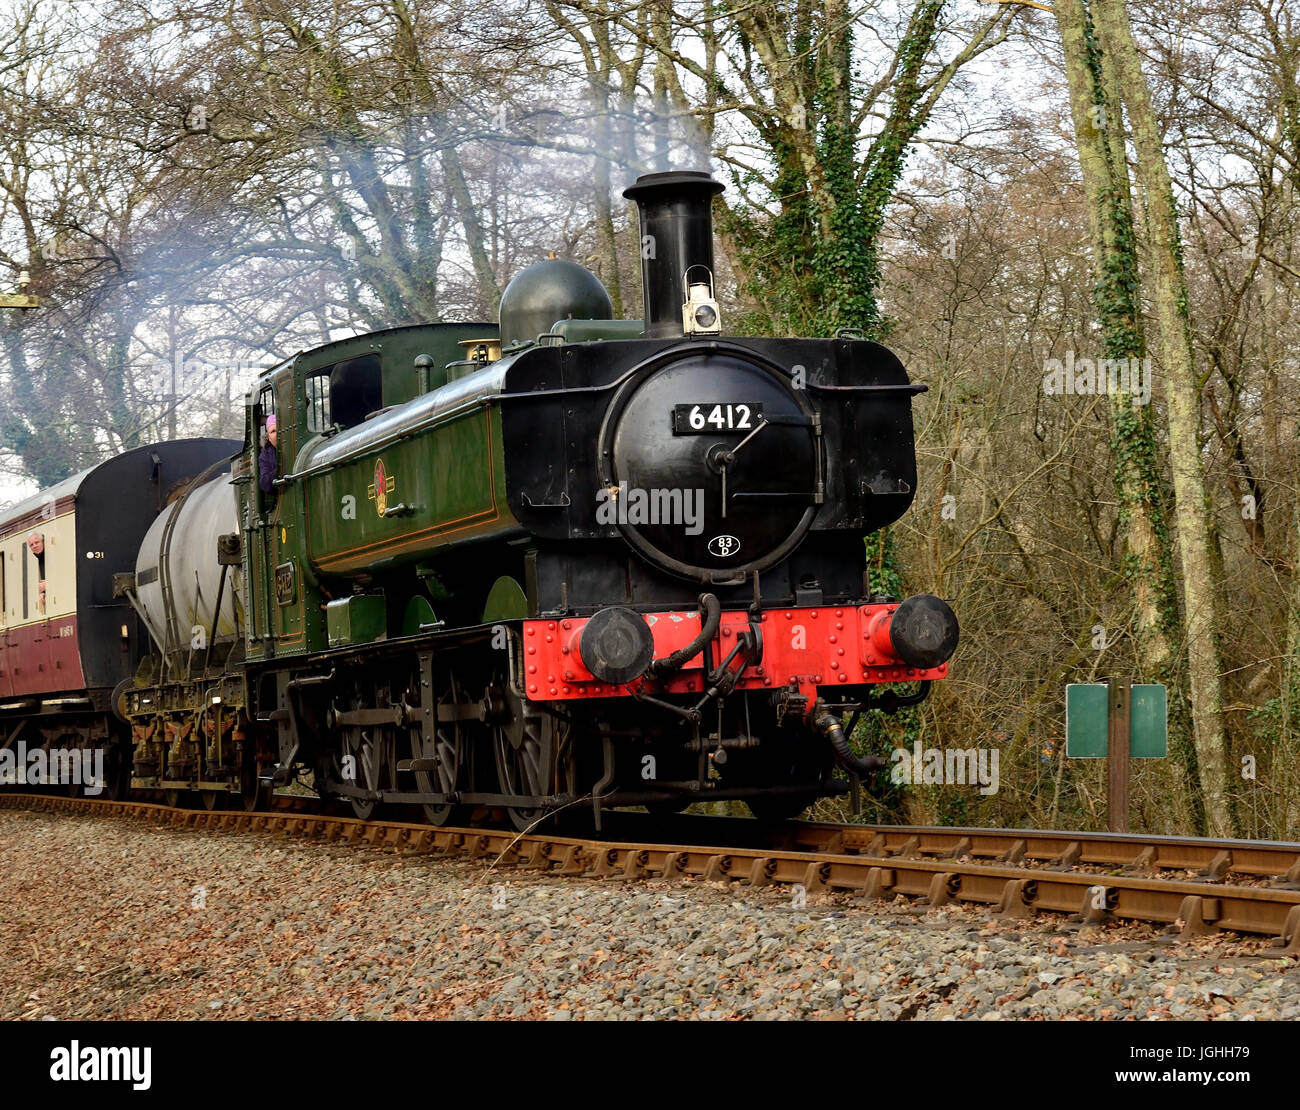 GWR 0-6-0 pannier tank loco No 6412 hauling a steam train on the South Devon Railway. Stock Photo